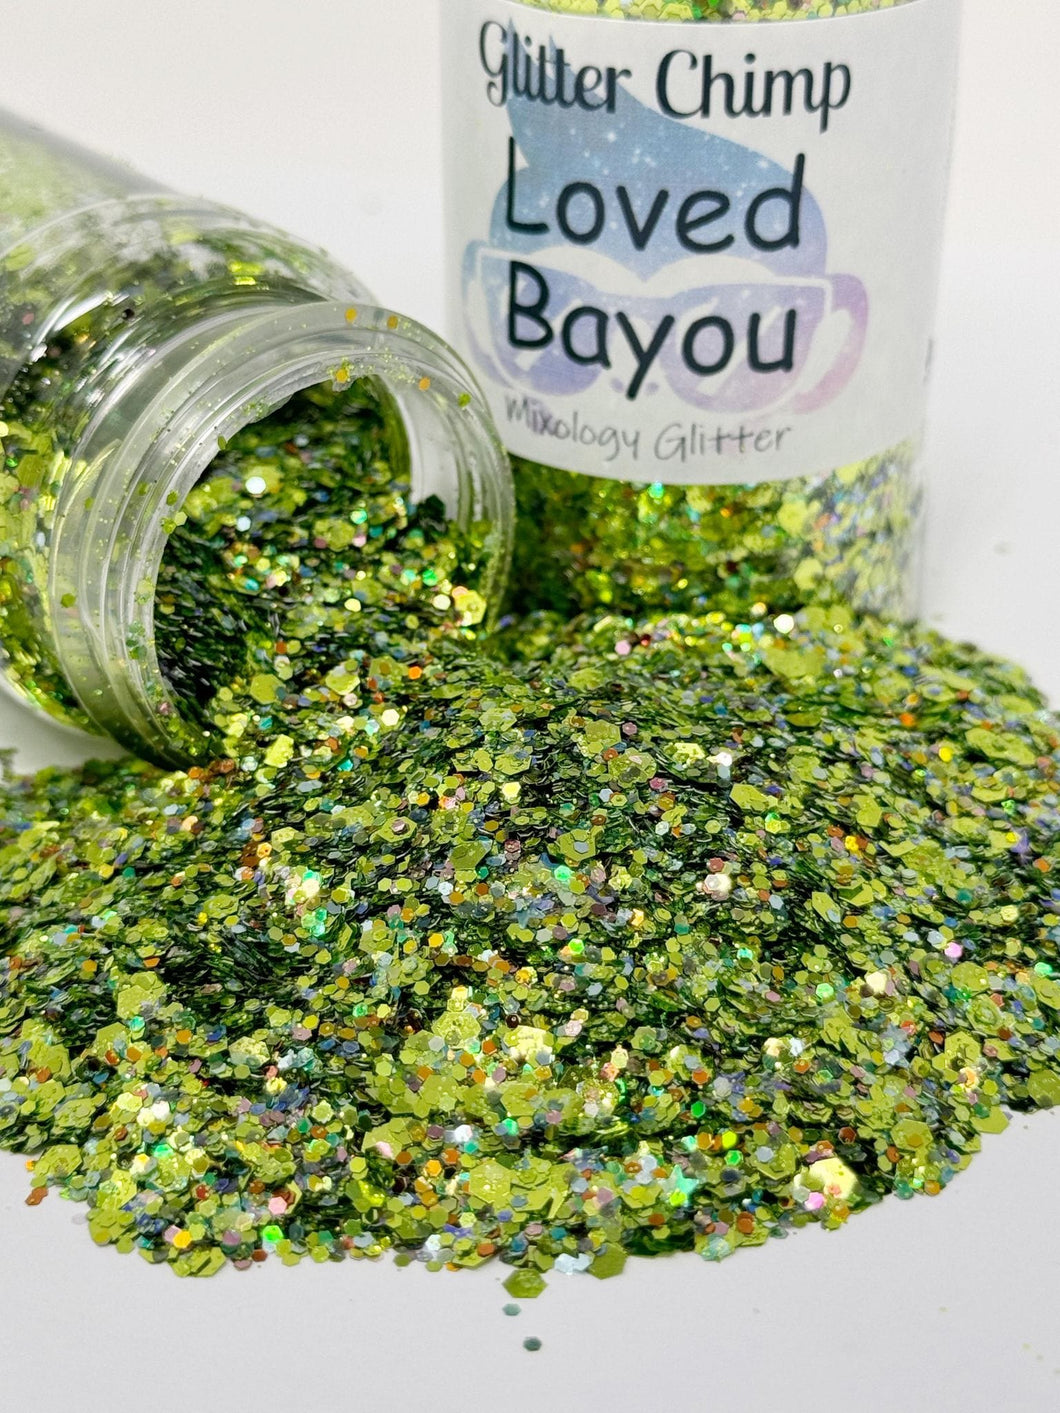 Loved Bayou - Mixology Glitter